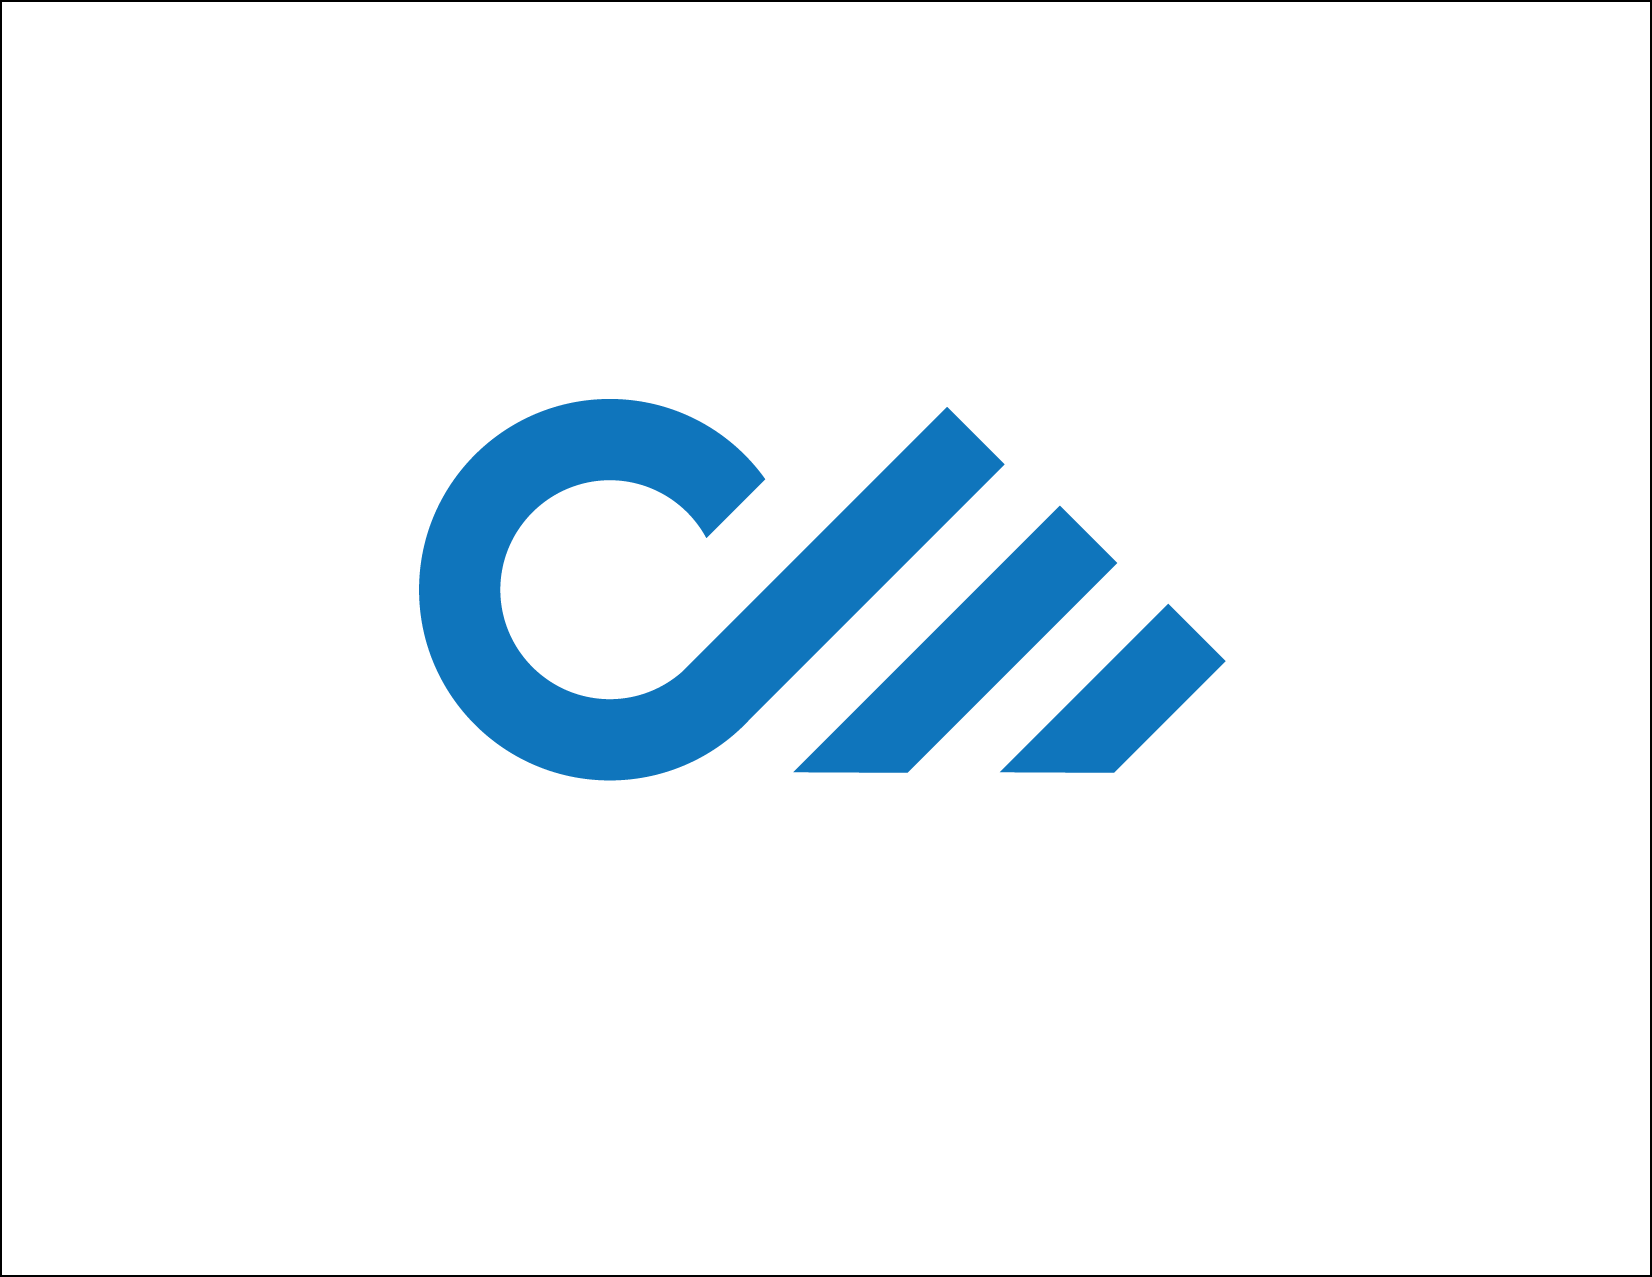 Cm Logo - CM Logo. About of logos